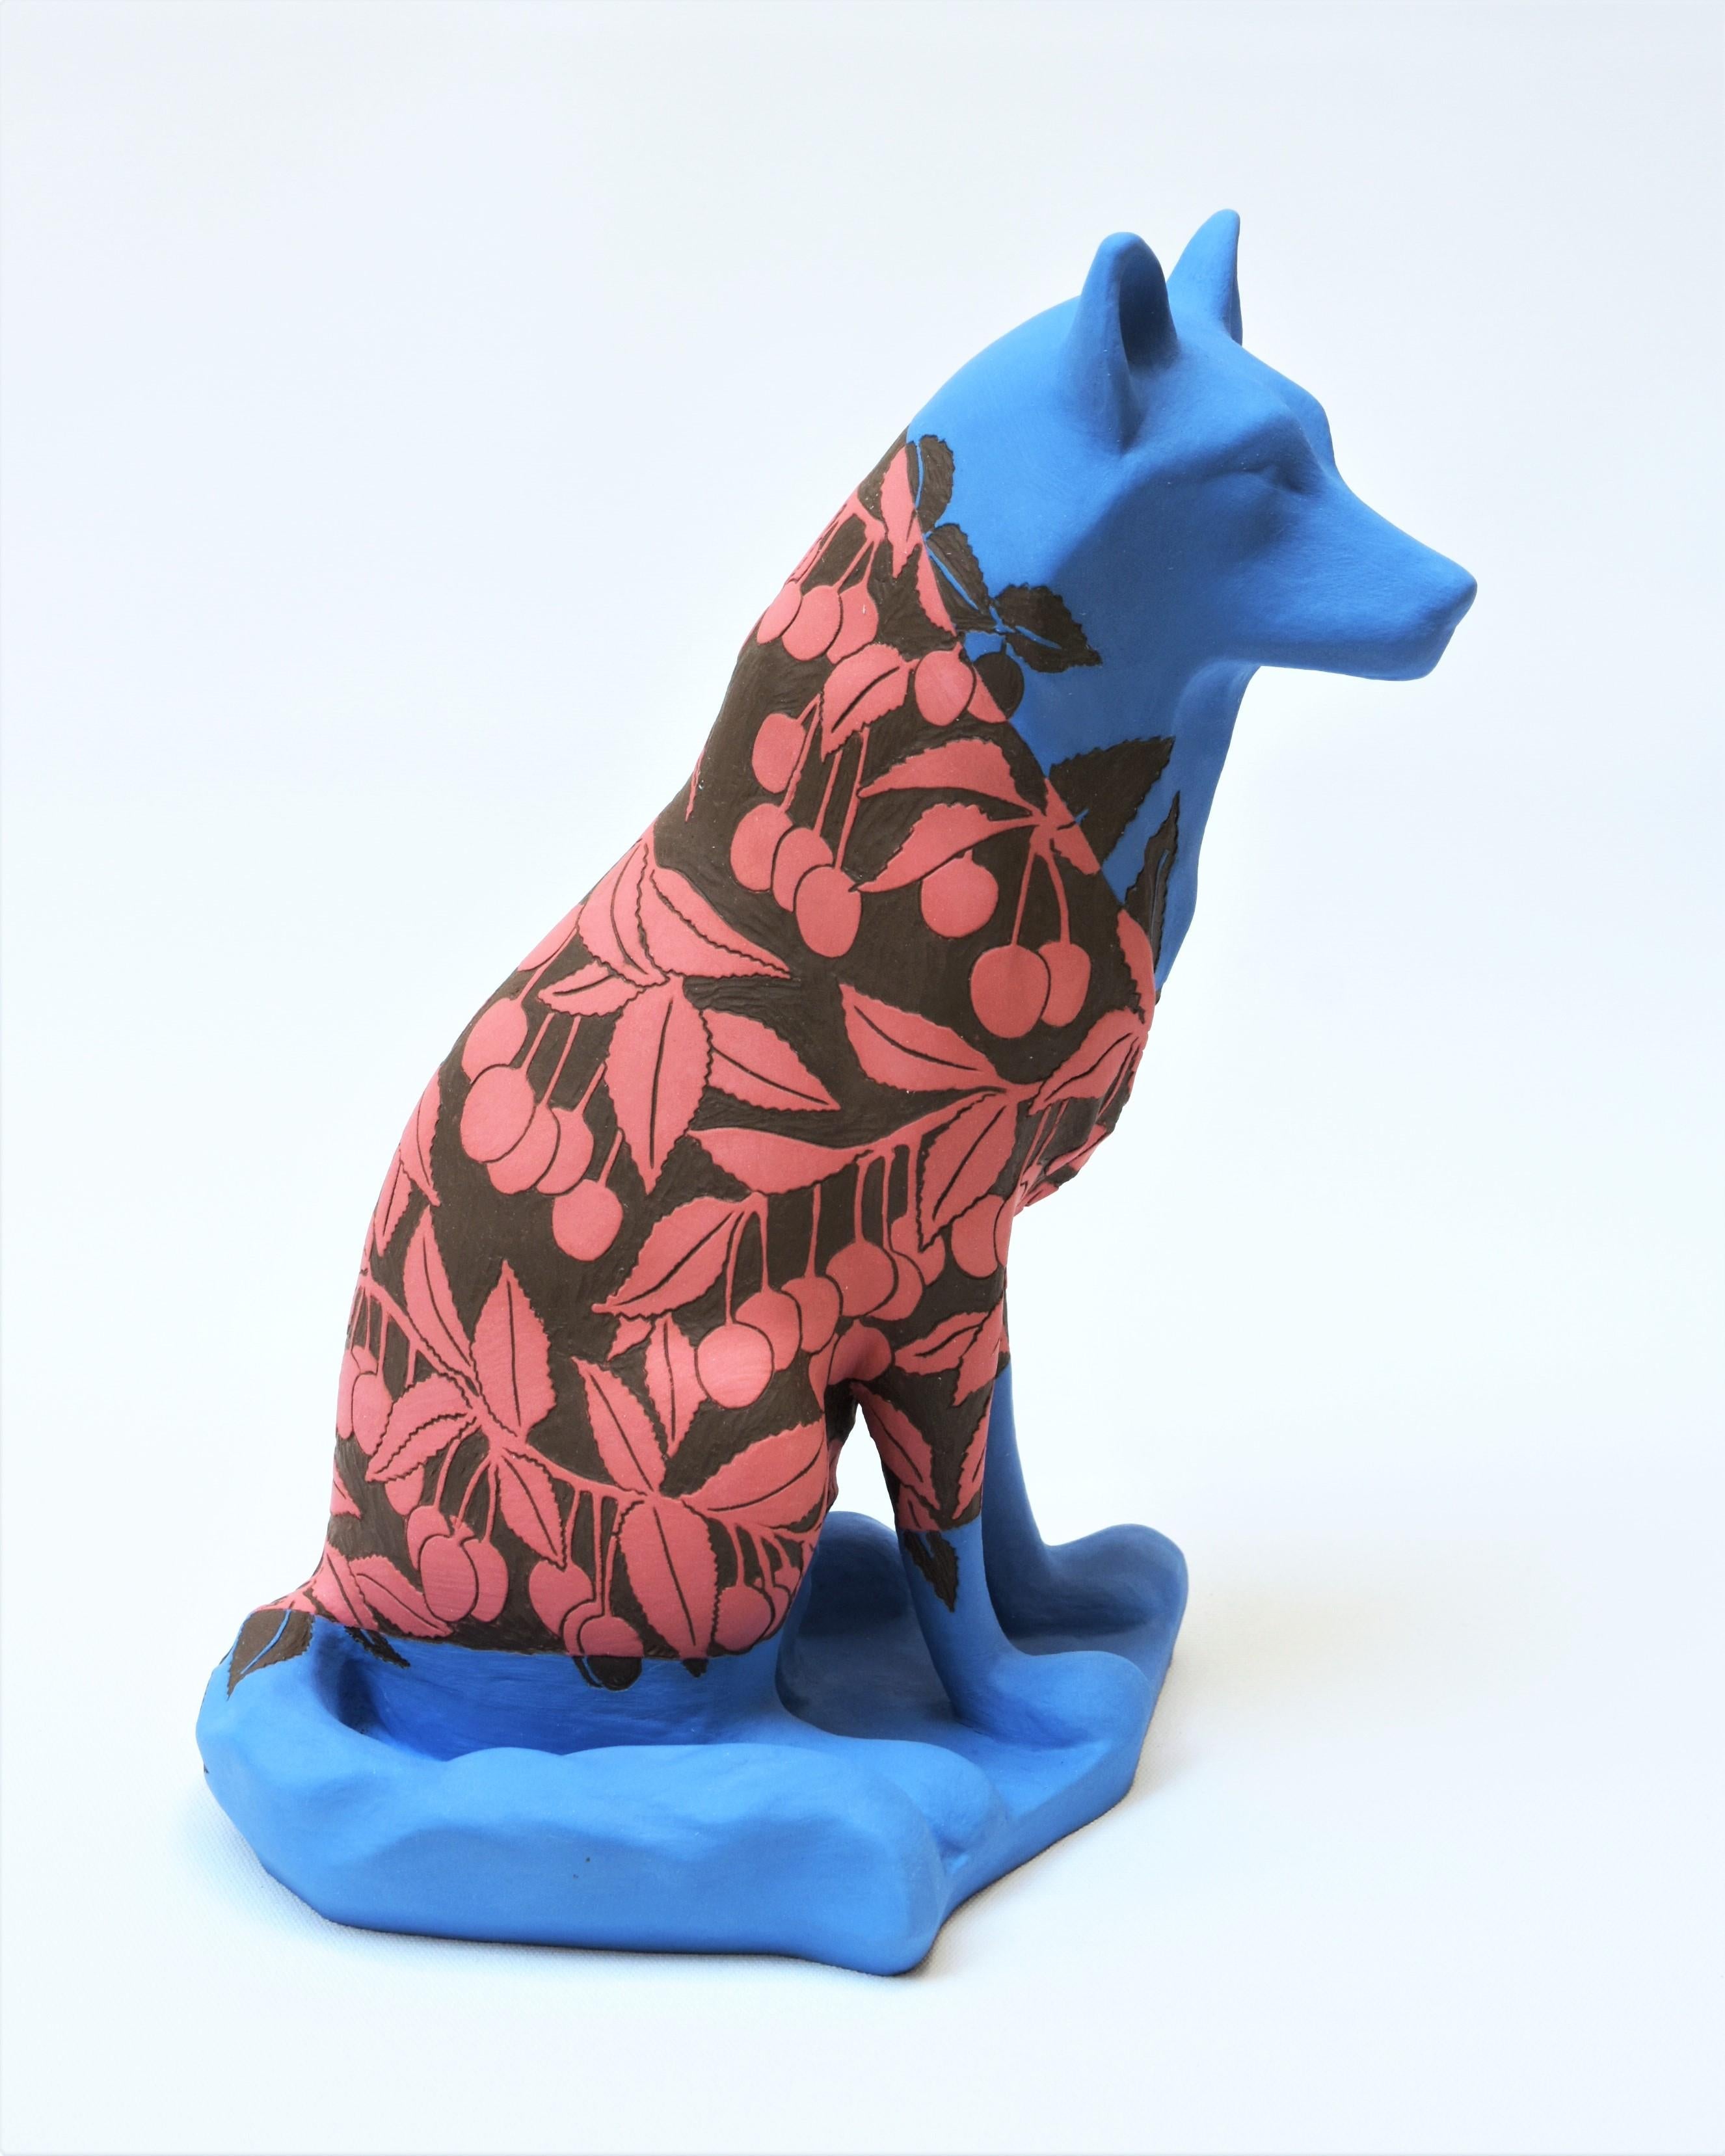 Sabina Pelc Figurative Sculpture - "Wolf - Cherry", unique animal sculpture, ceramic, sgraffito technique